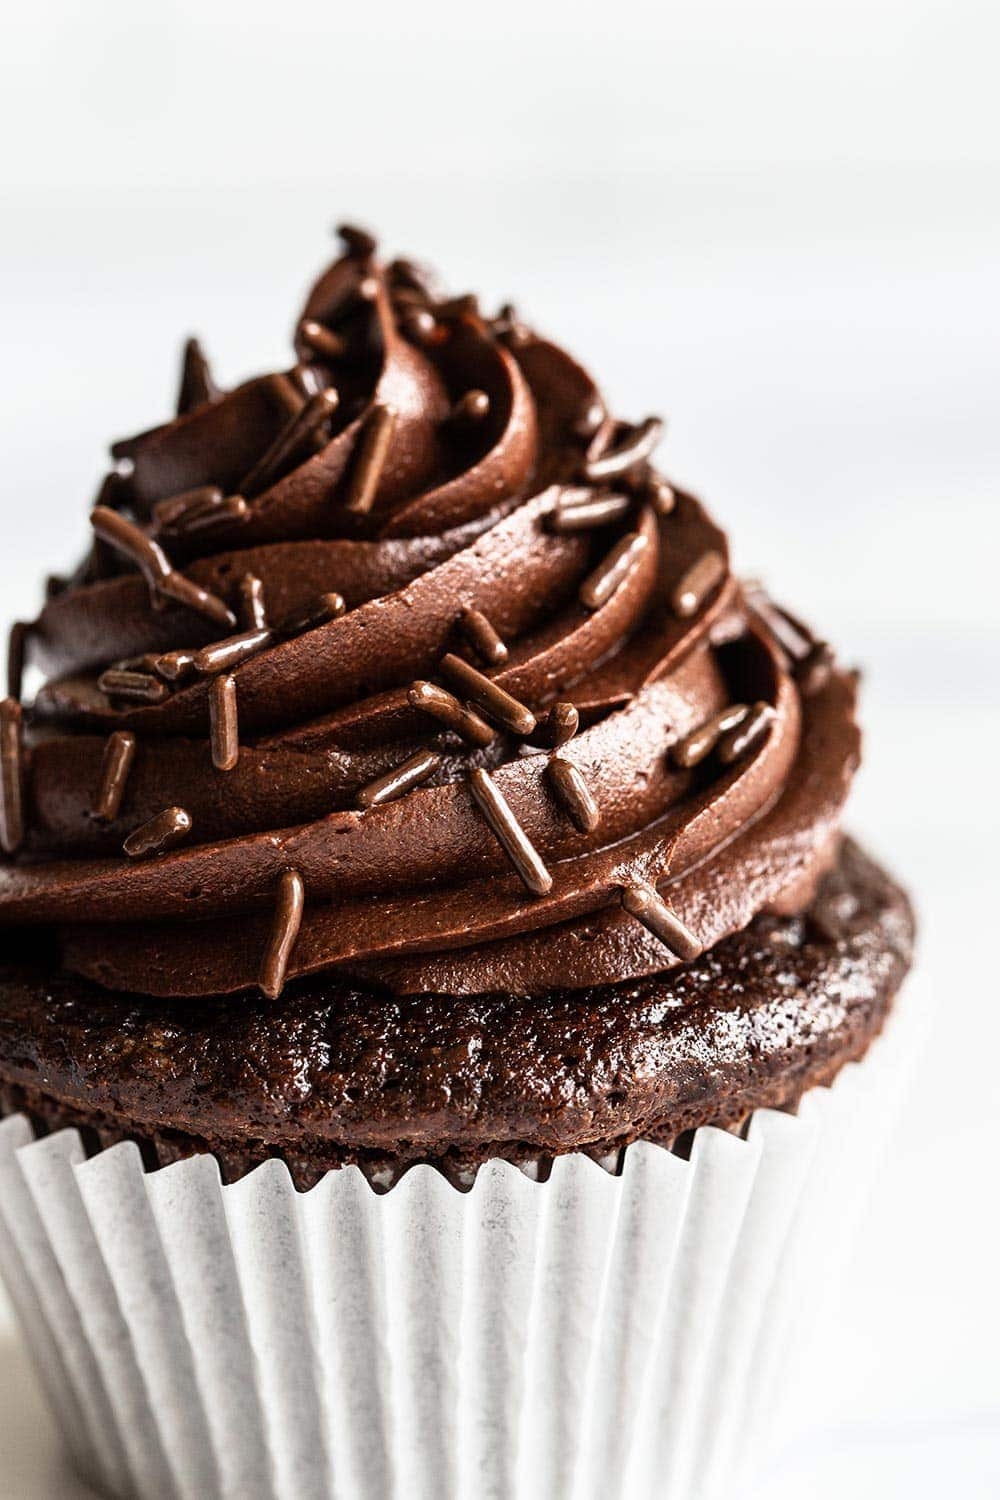 Chocolate Cupcakes with Choco Sprinkles